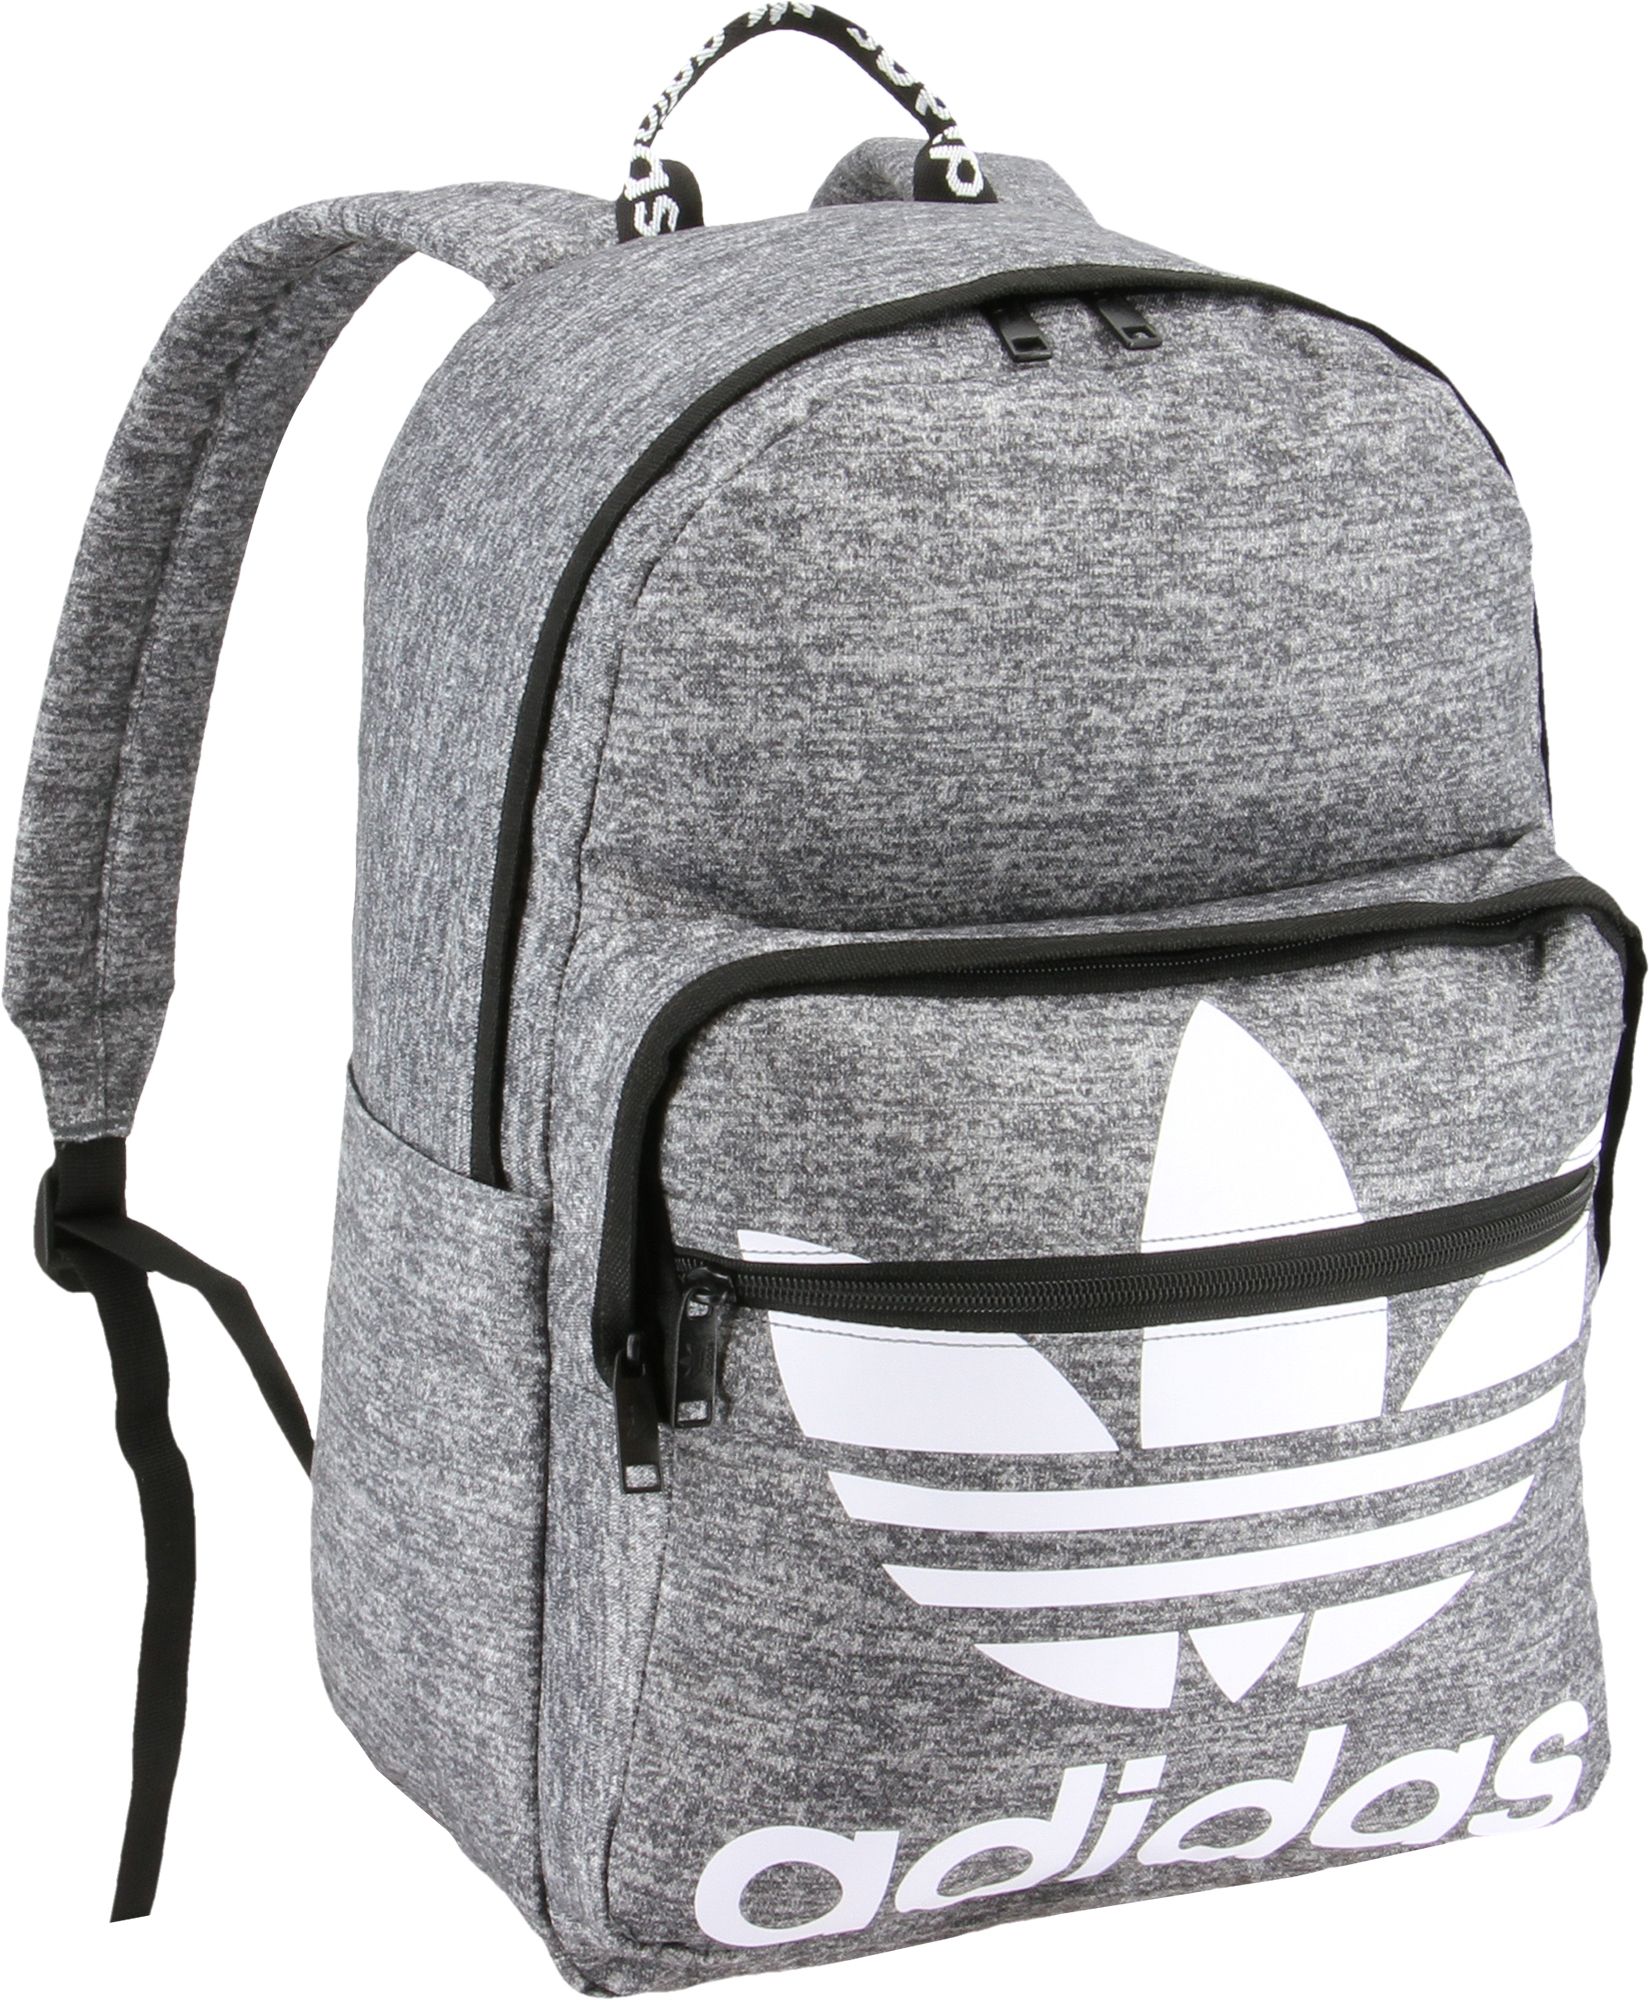 cute backpacks adidas